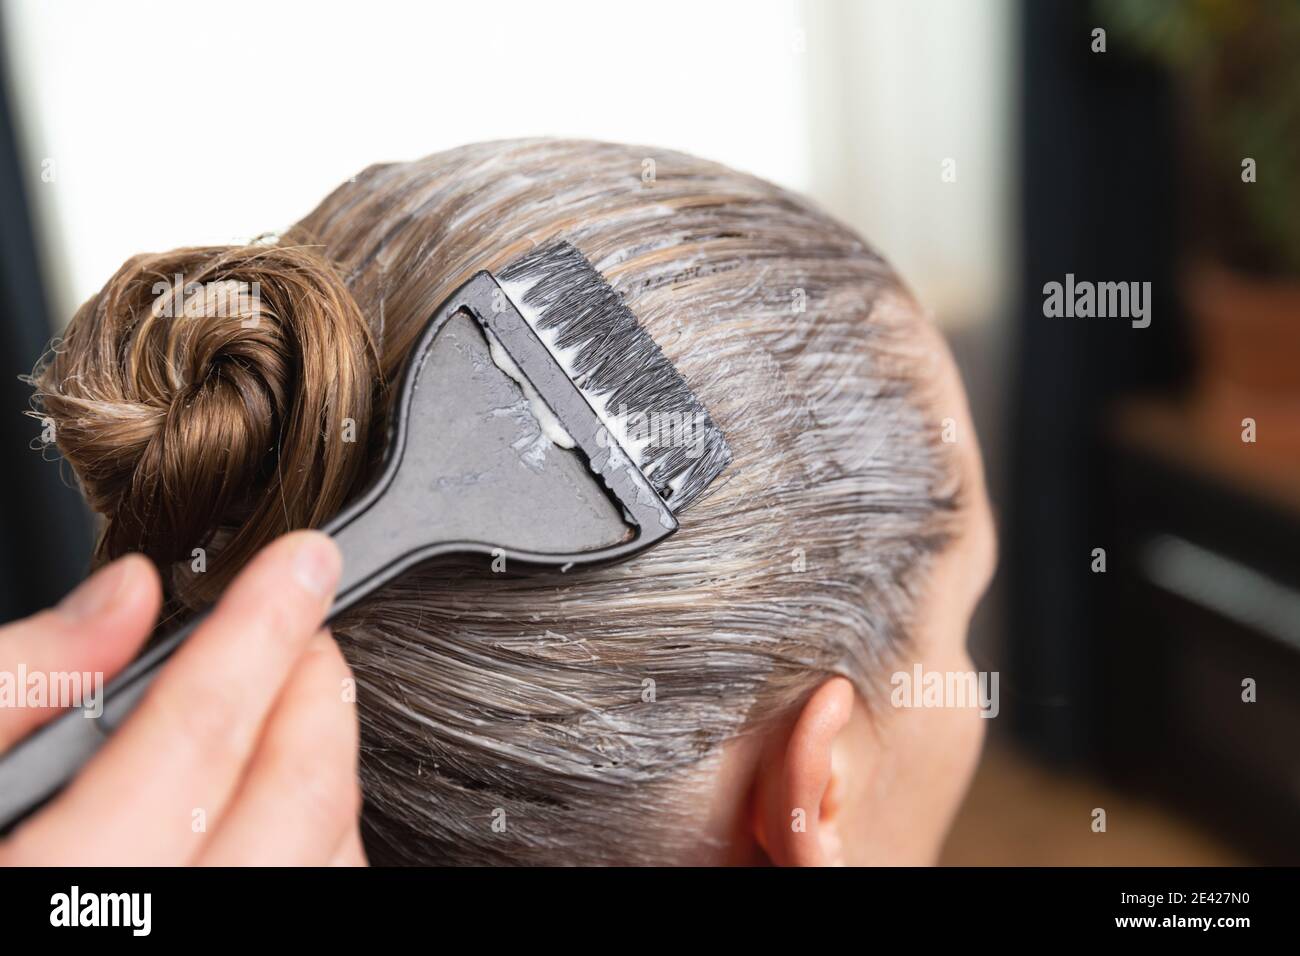 https://c8.alamy.com/comp/2E427N0/hairdresser-applying-bleach-or-hair-color-for-hair-dye-with-a-black-brush-at-home-or-salon-2E427N0.jpg